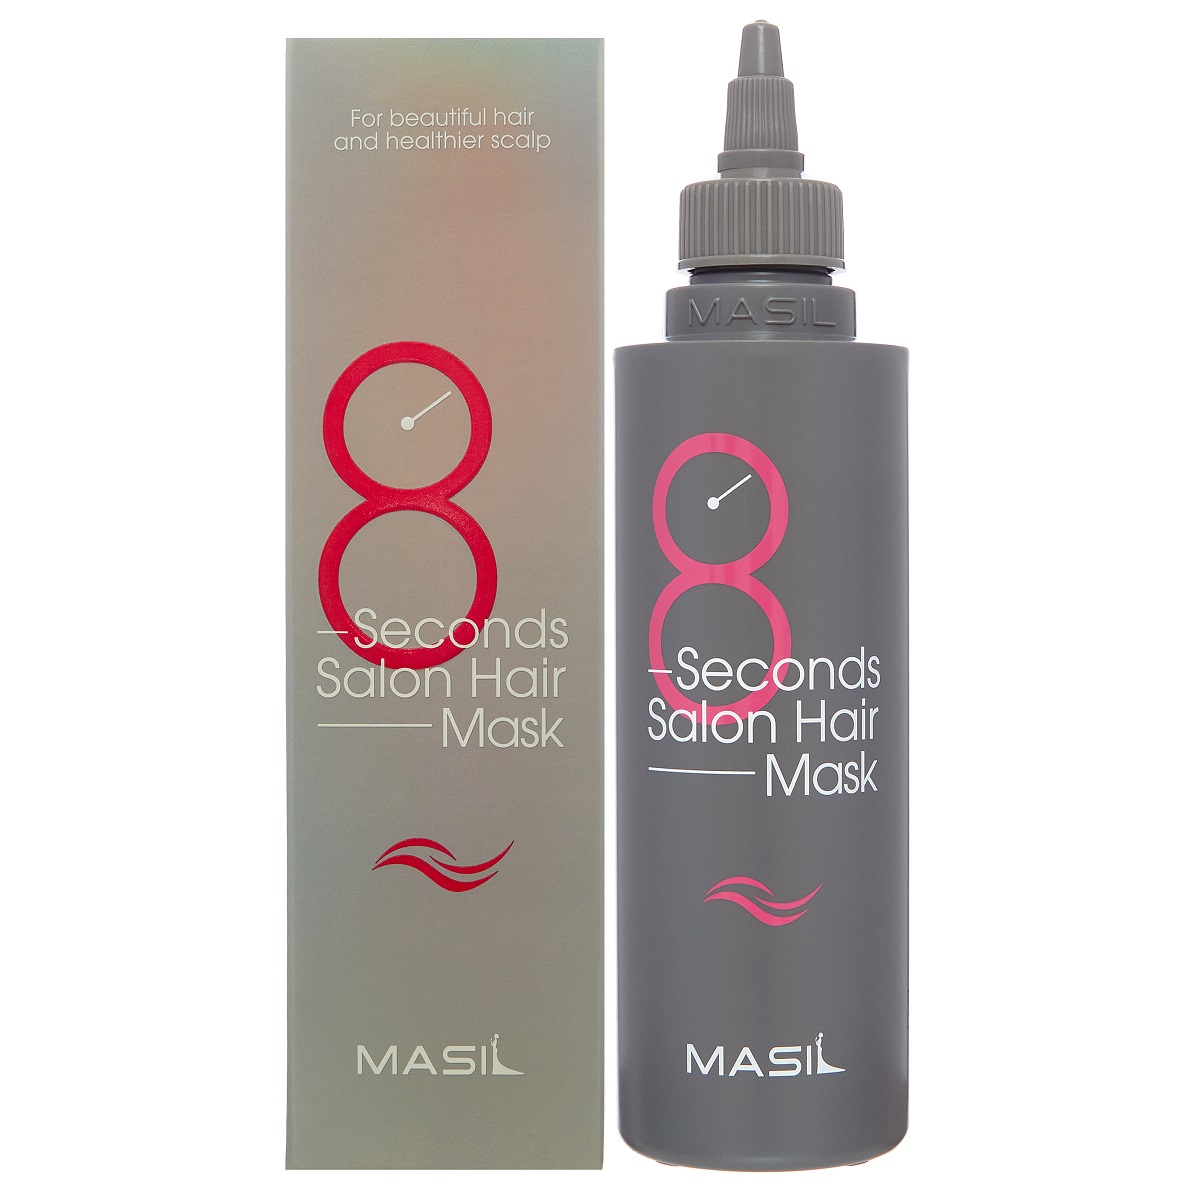 Masil Маска для быстрого восстановления волос 8 Seconds Salon Hair Mask, 200 мл (Masil, )